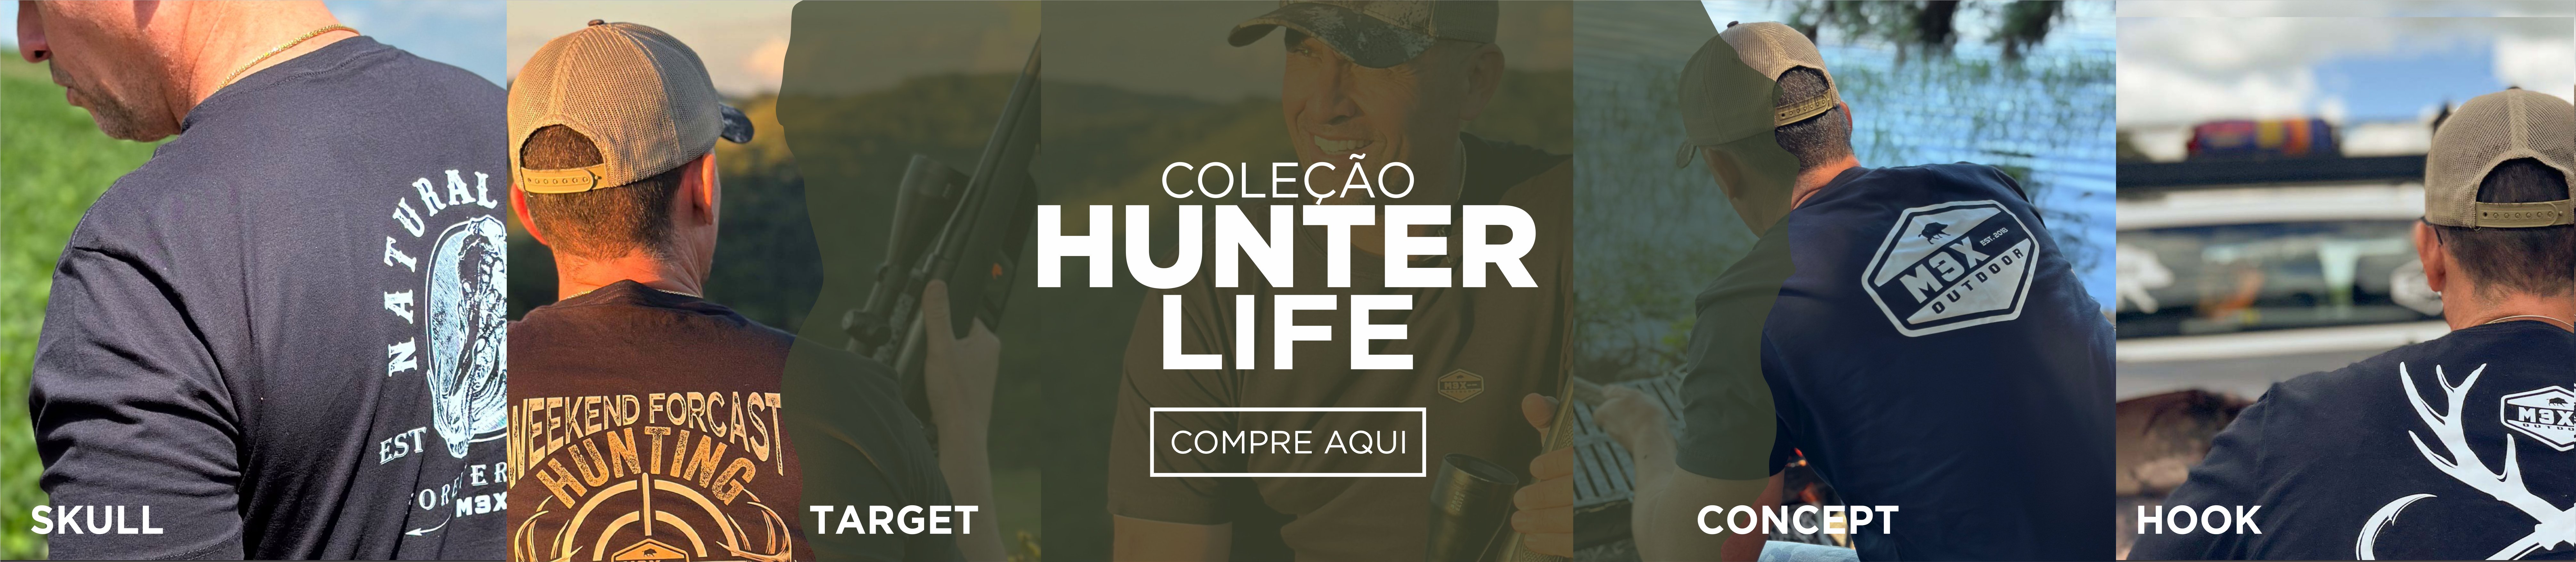 banner-site-colecao-hunter